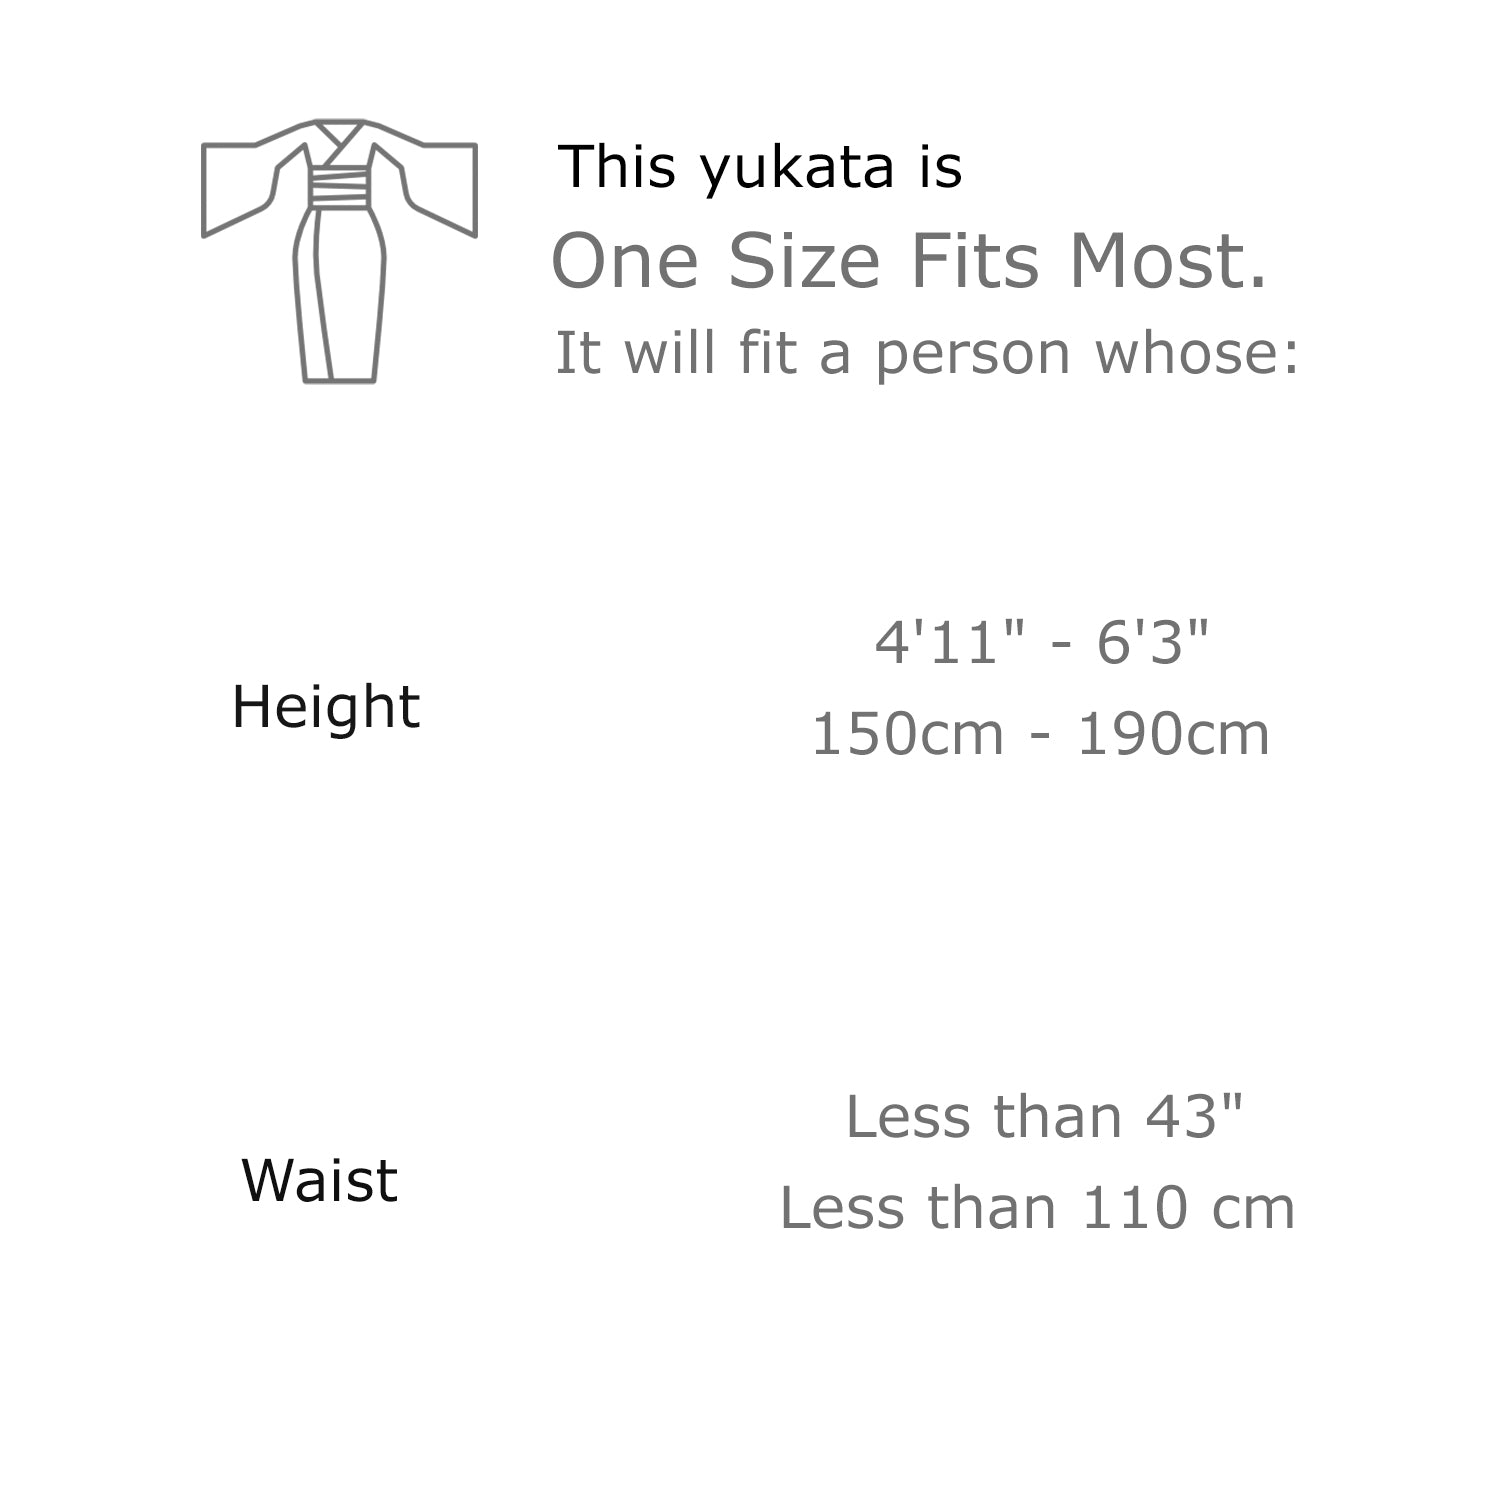 Will the yukata fits me